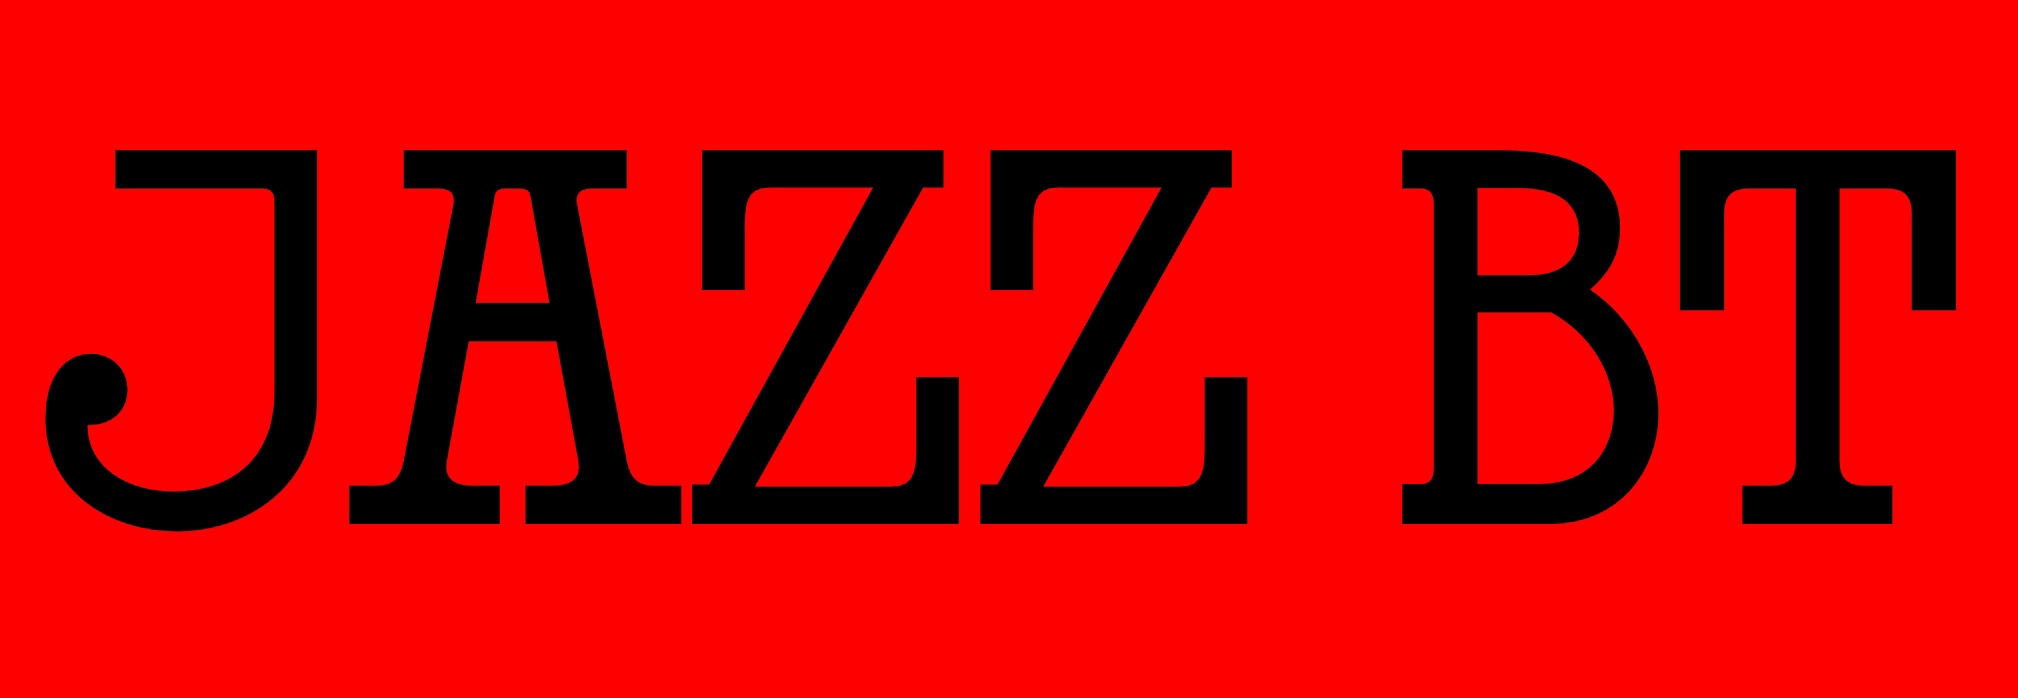 Пример шрифта Jazz Bt